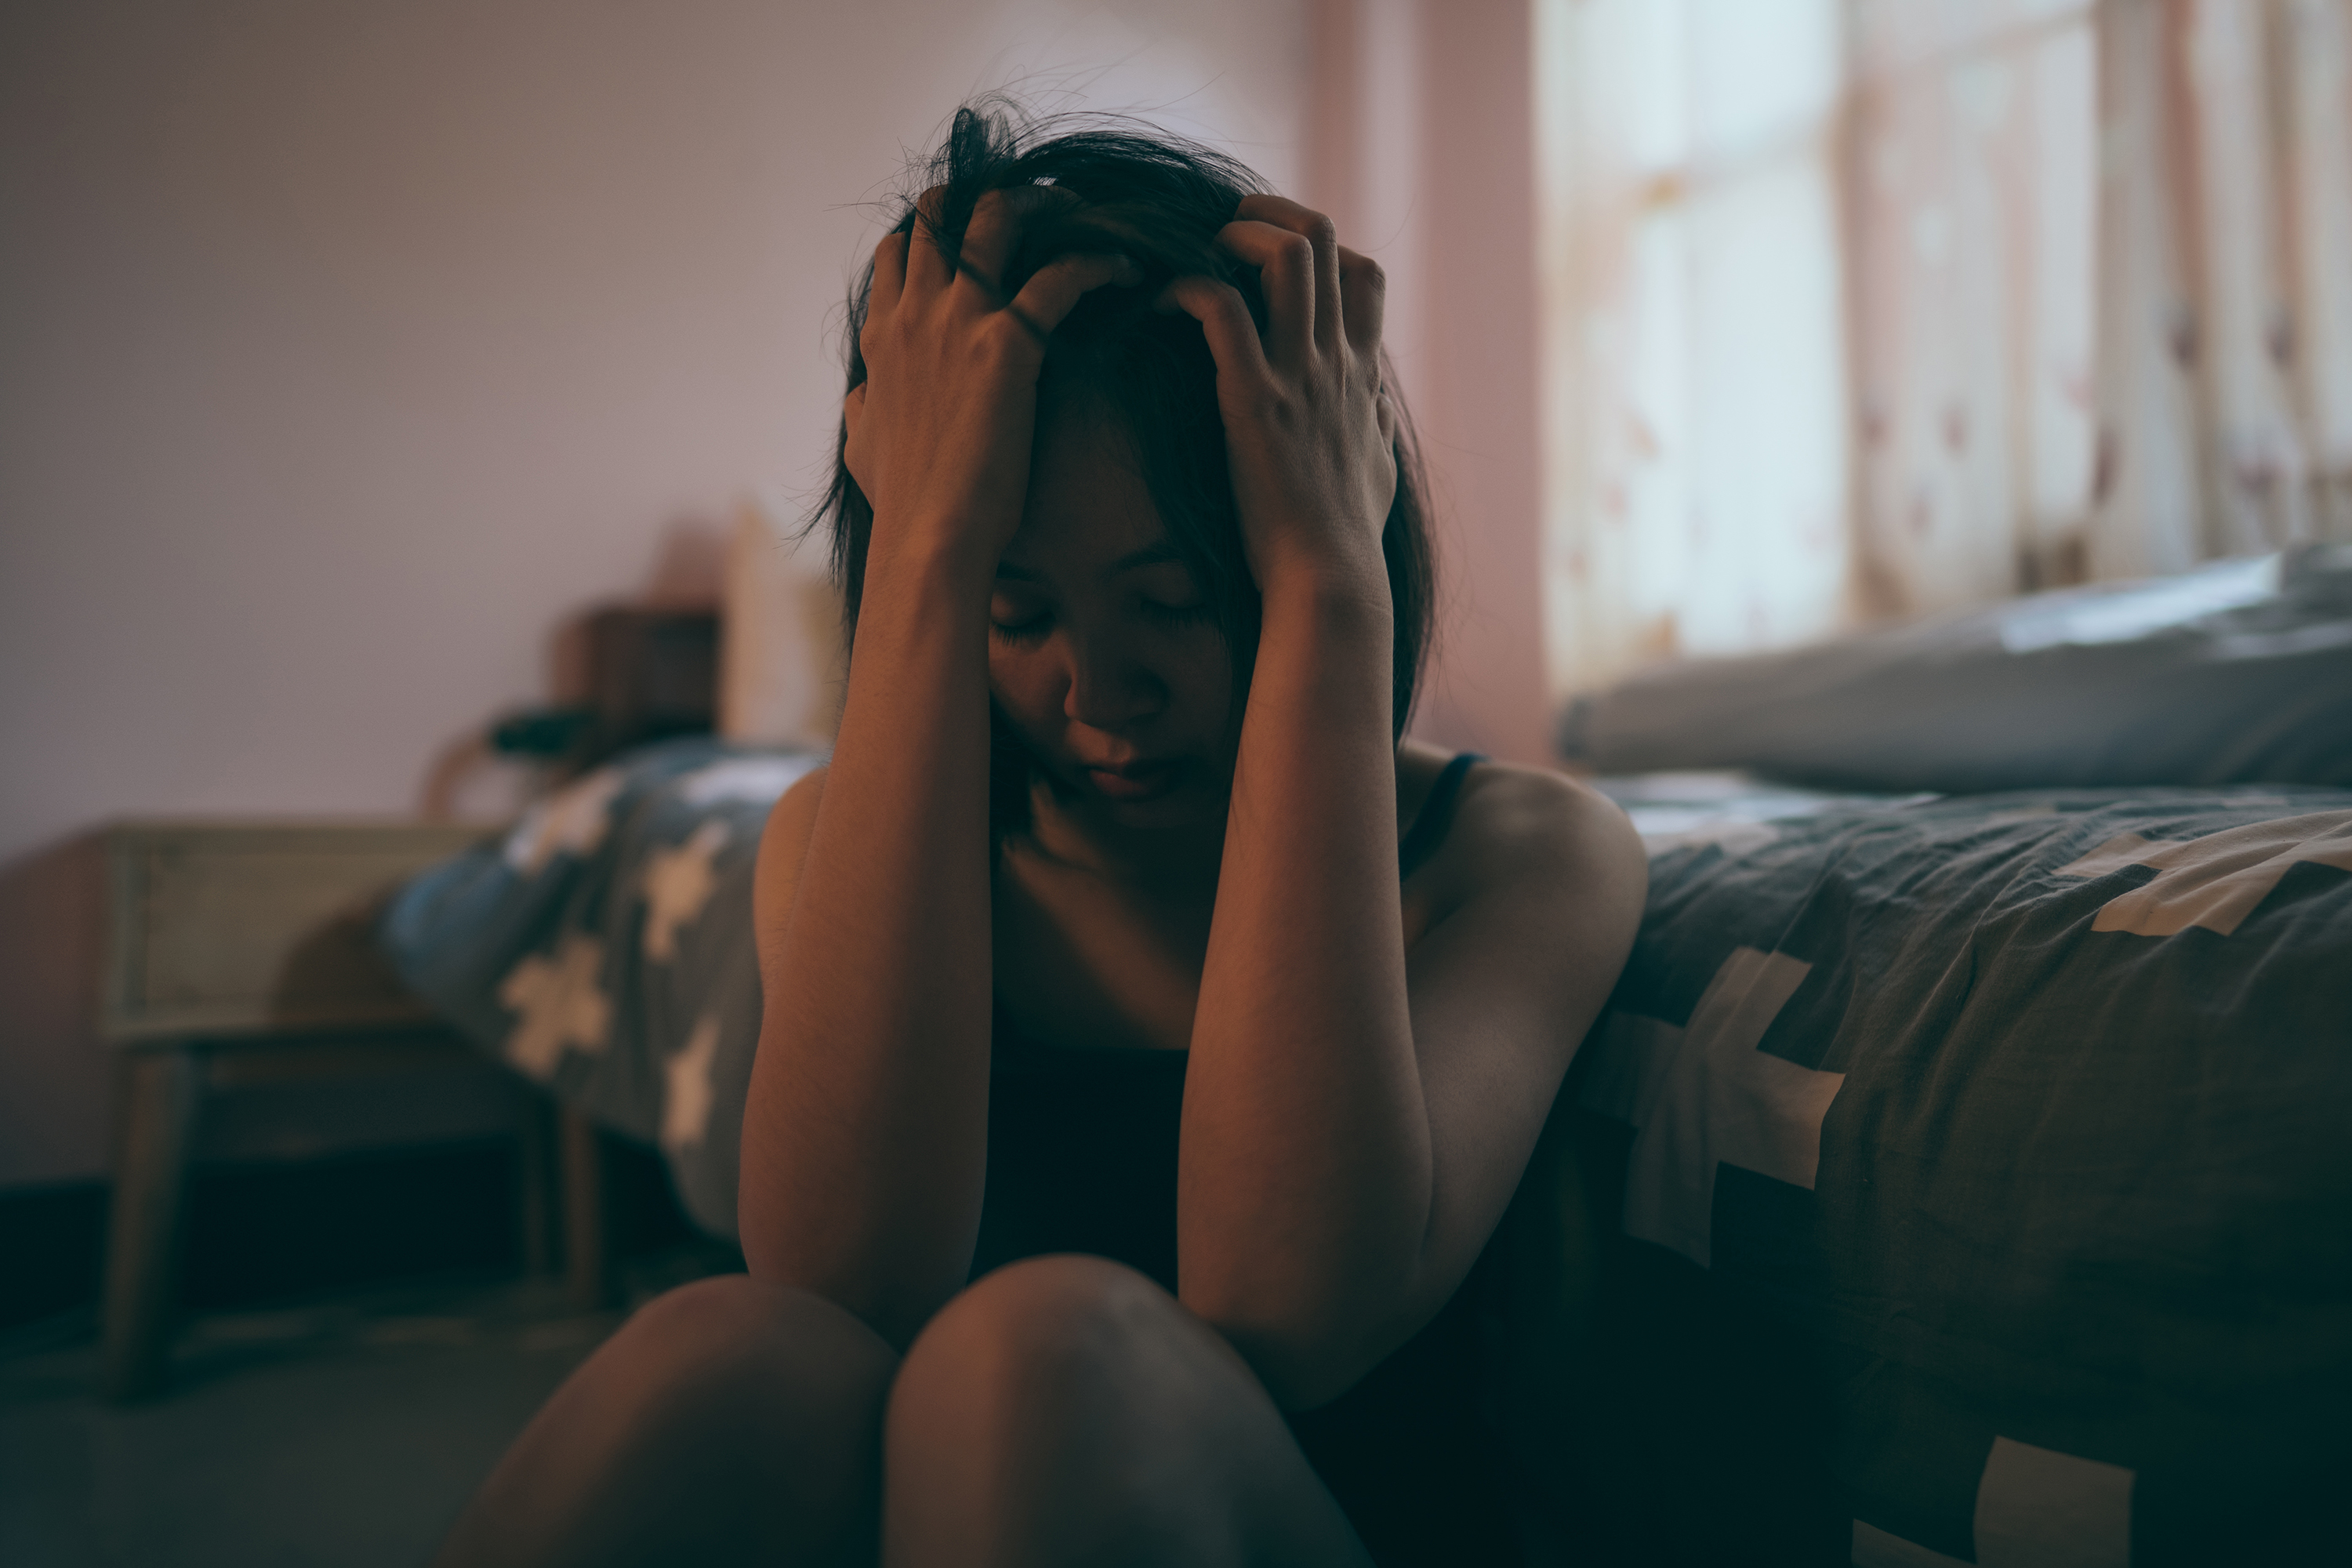 Menstrual Cycles Impact Women's Sleep and Mood, Study Shows